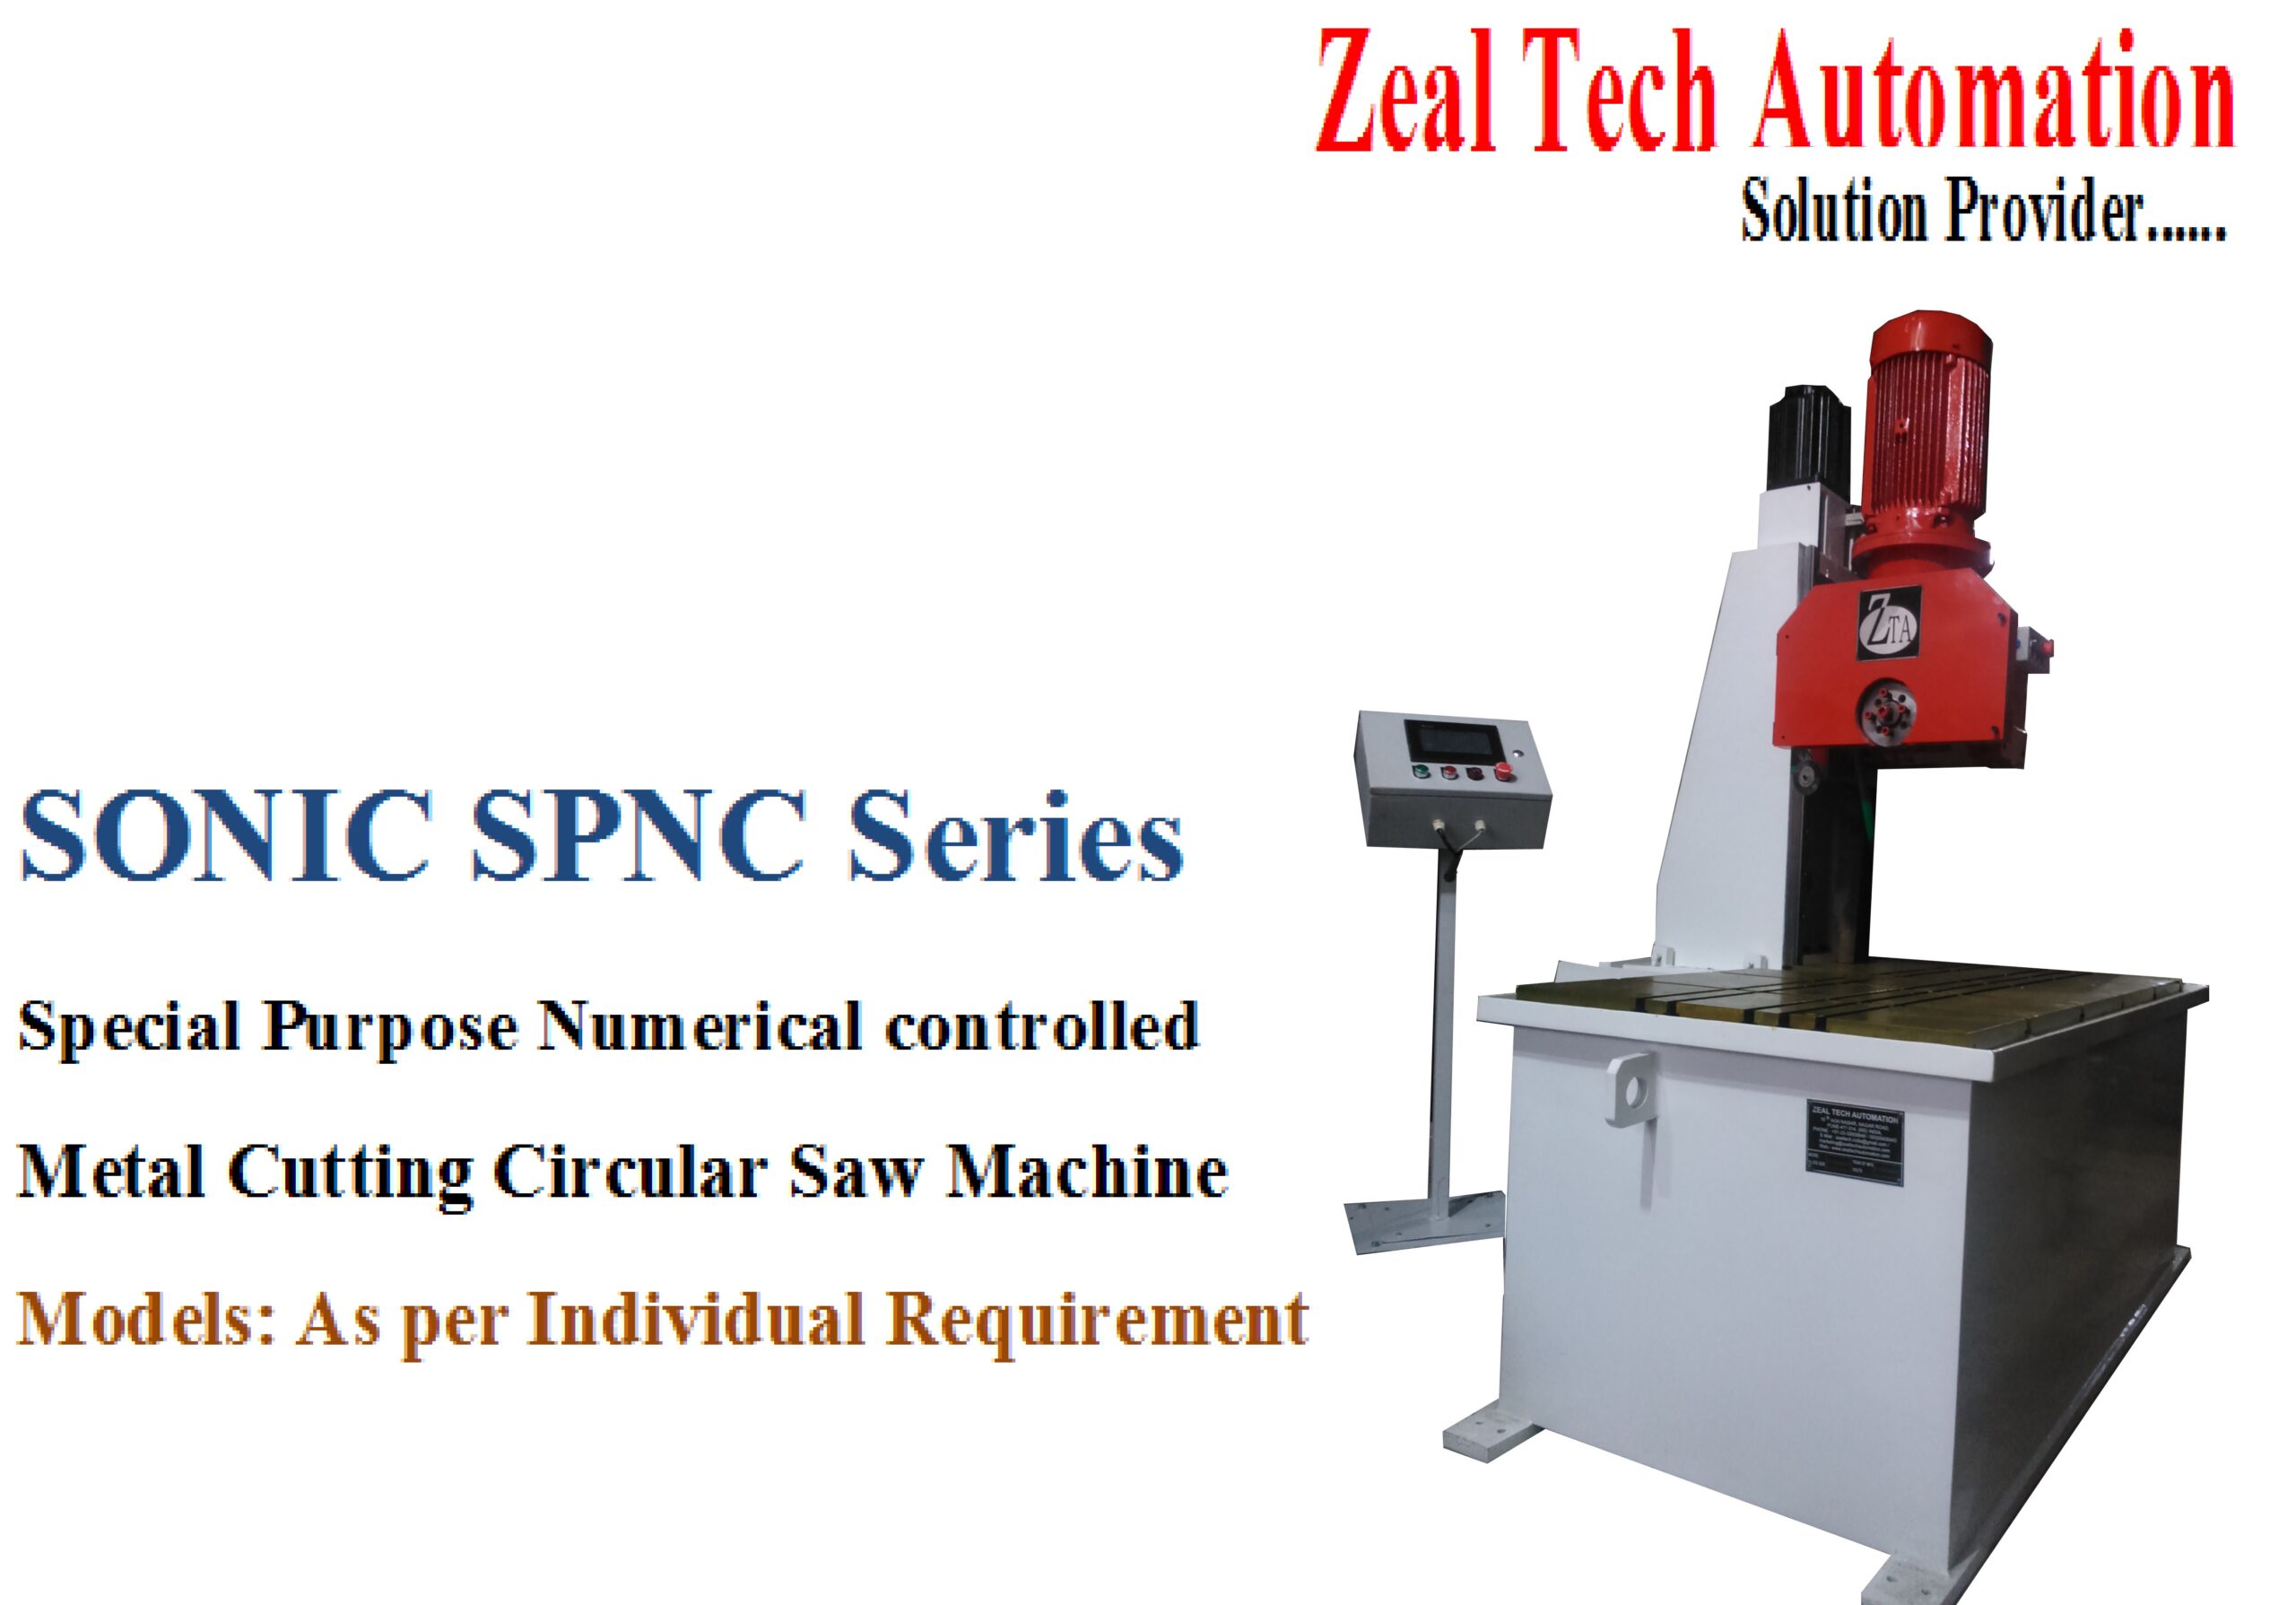 Special Purpose Numerical Controlled Metal Cutting Circular Saw Machine